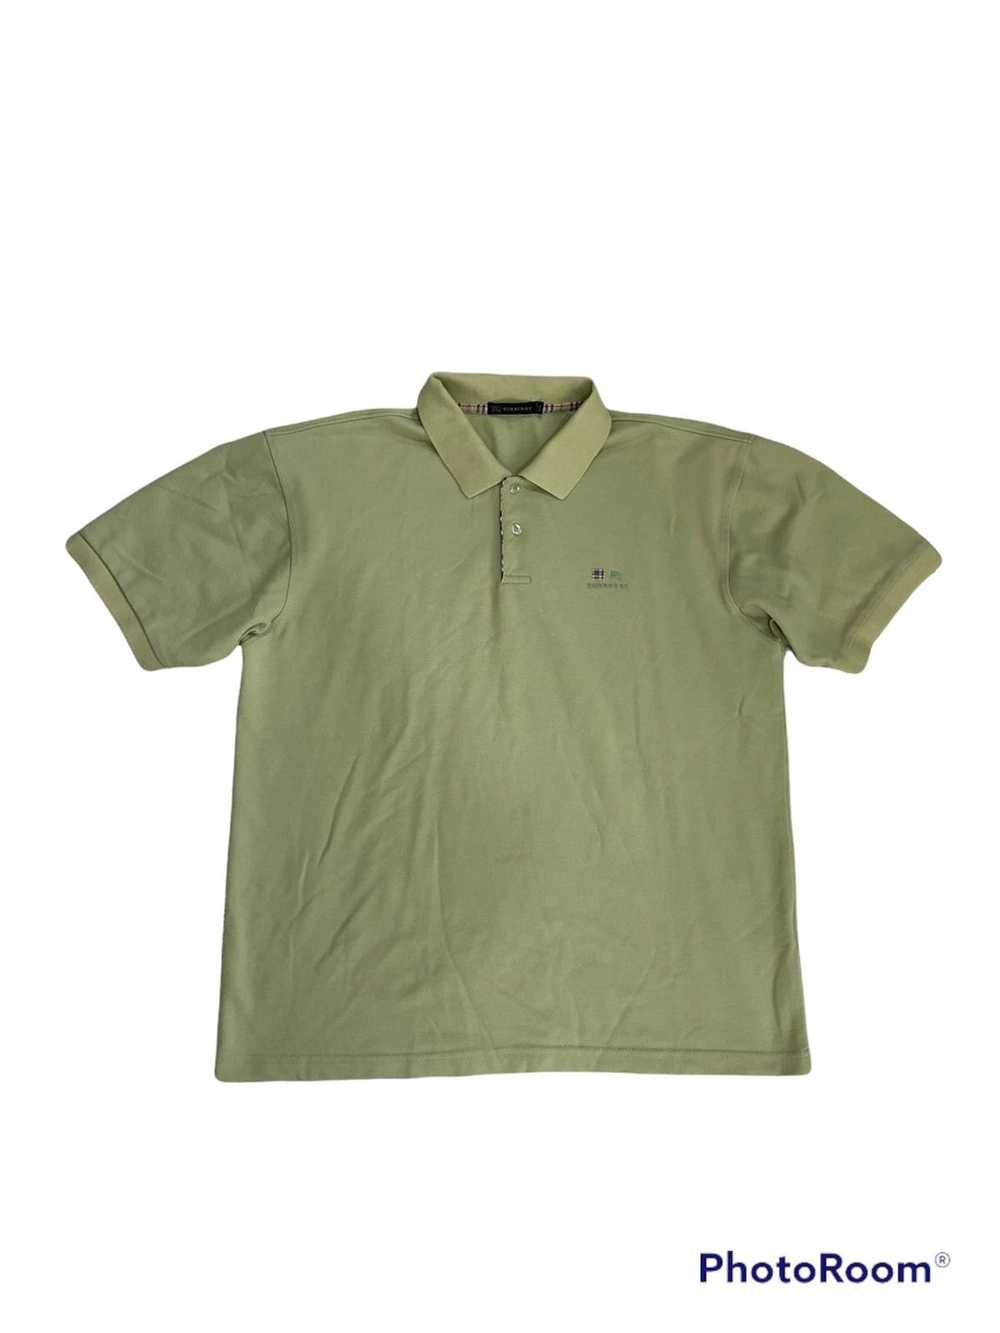 Burberry Burberry London green polo shirt men’s s… - image 1